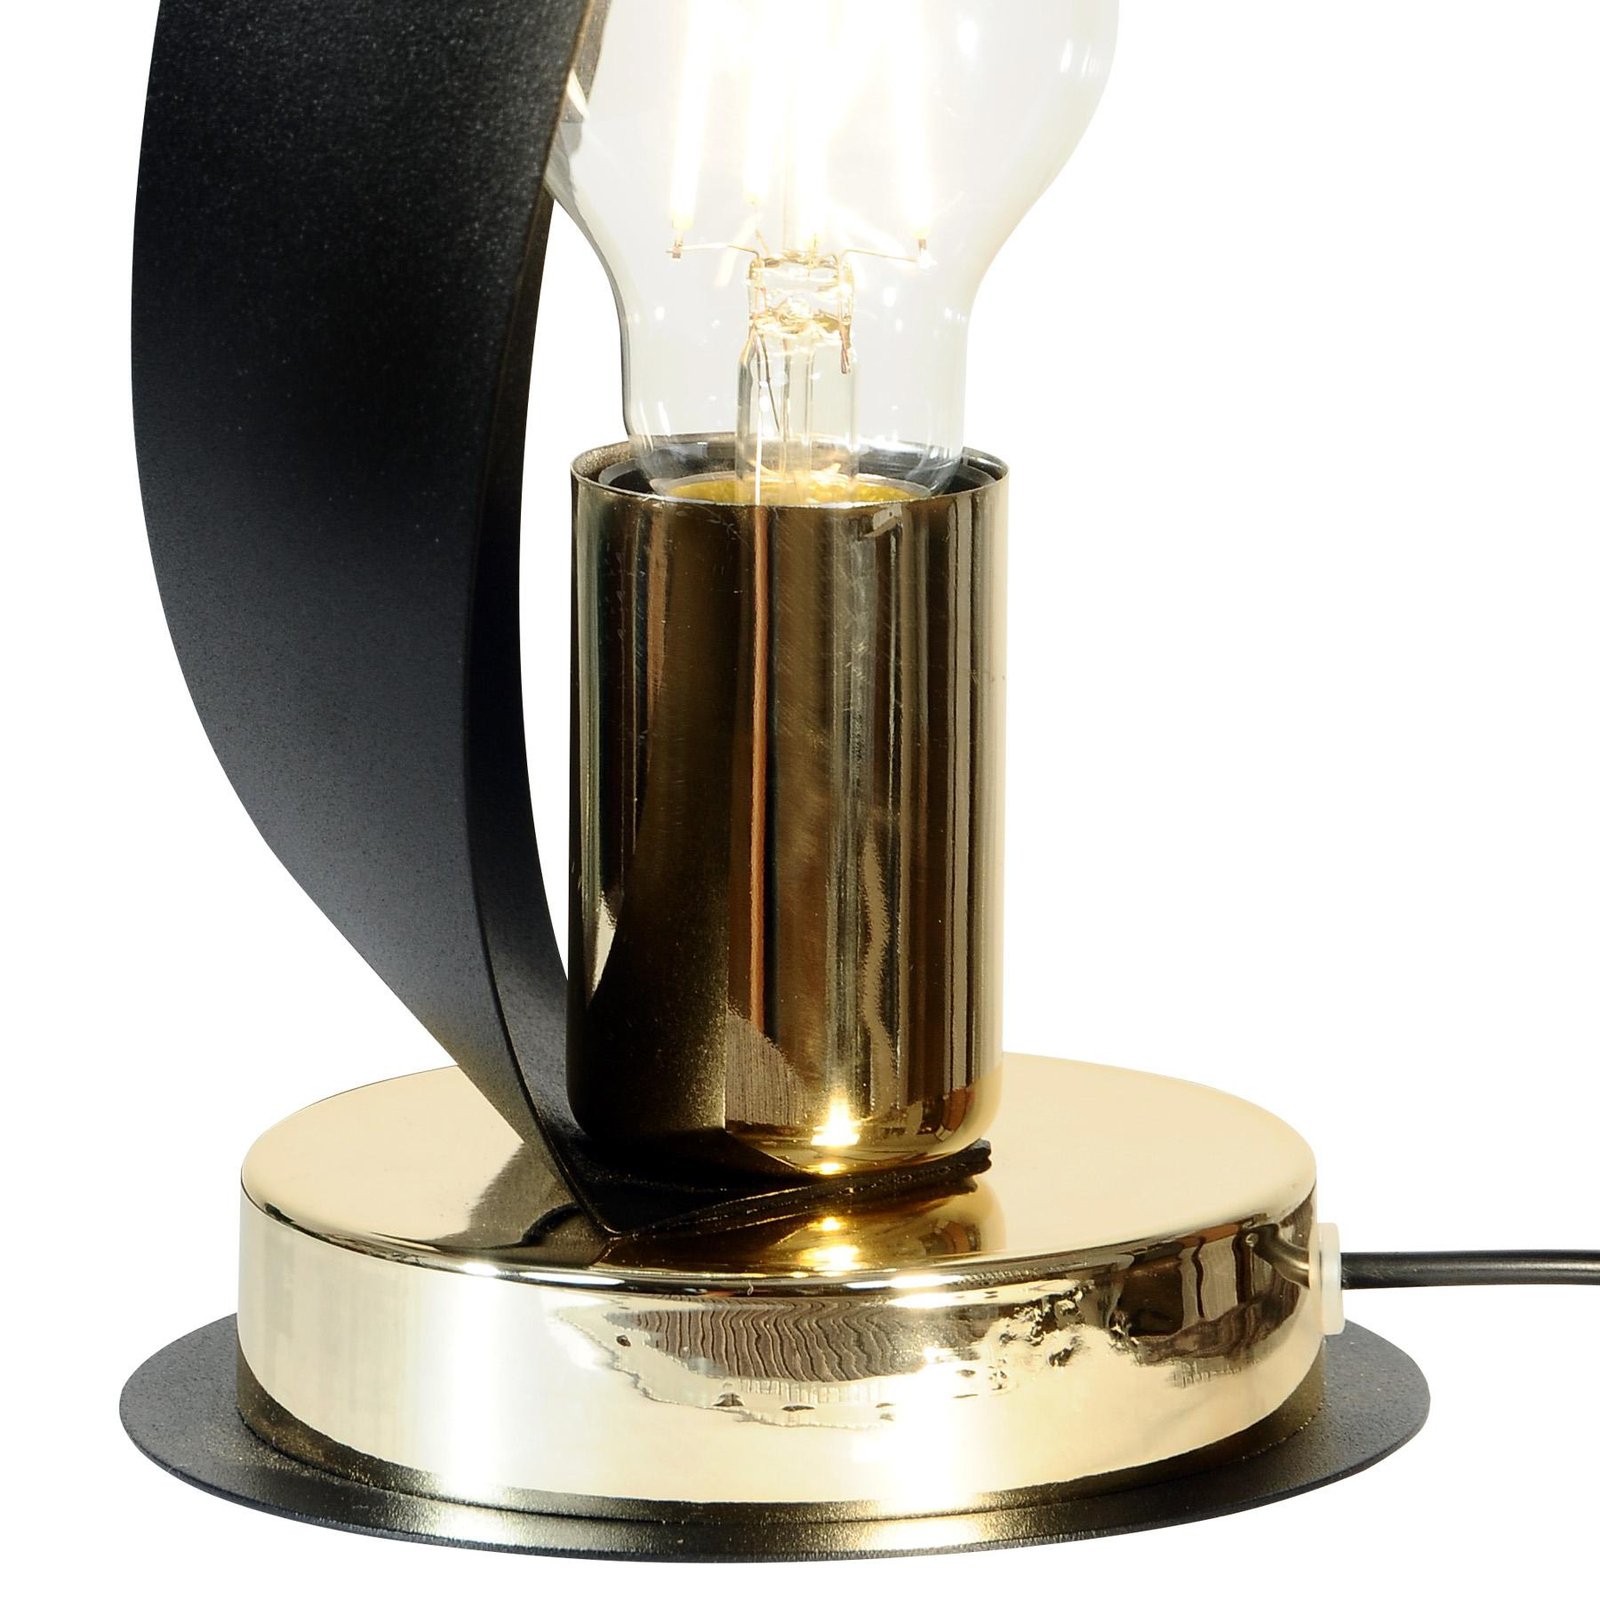 Euluna Petla bordlampe, svart/gull, metall, Ø 19 cm